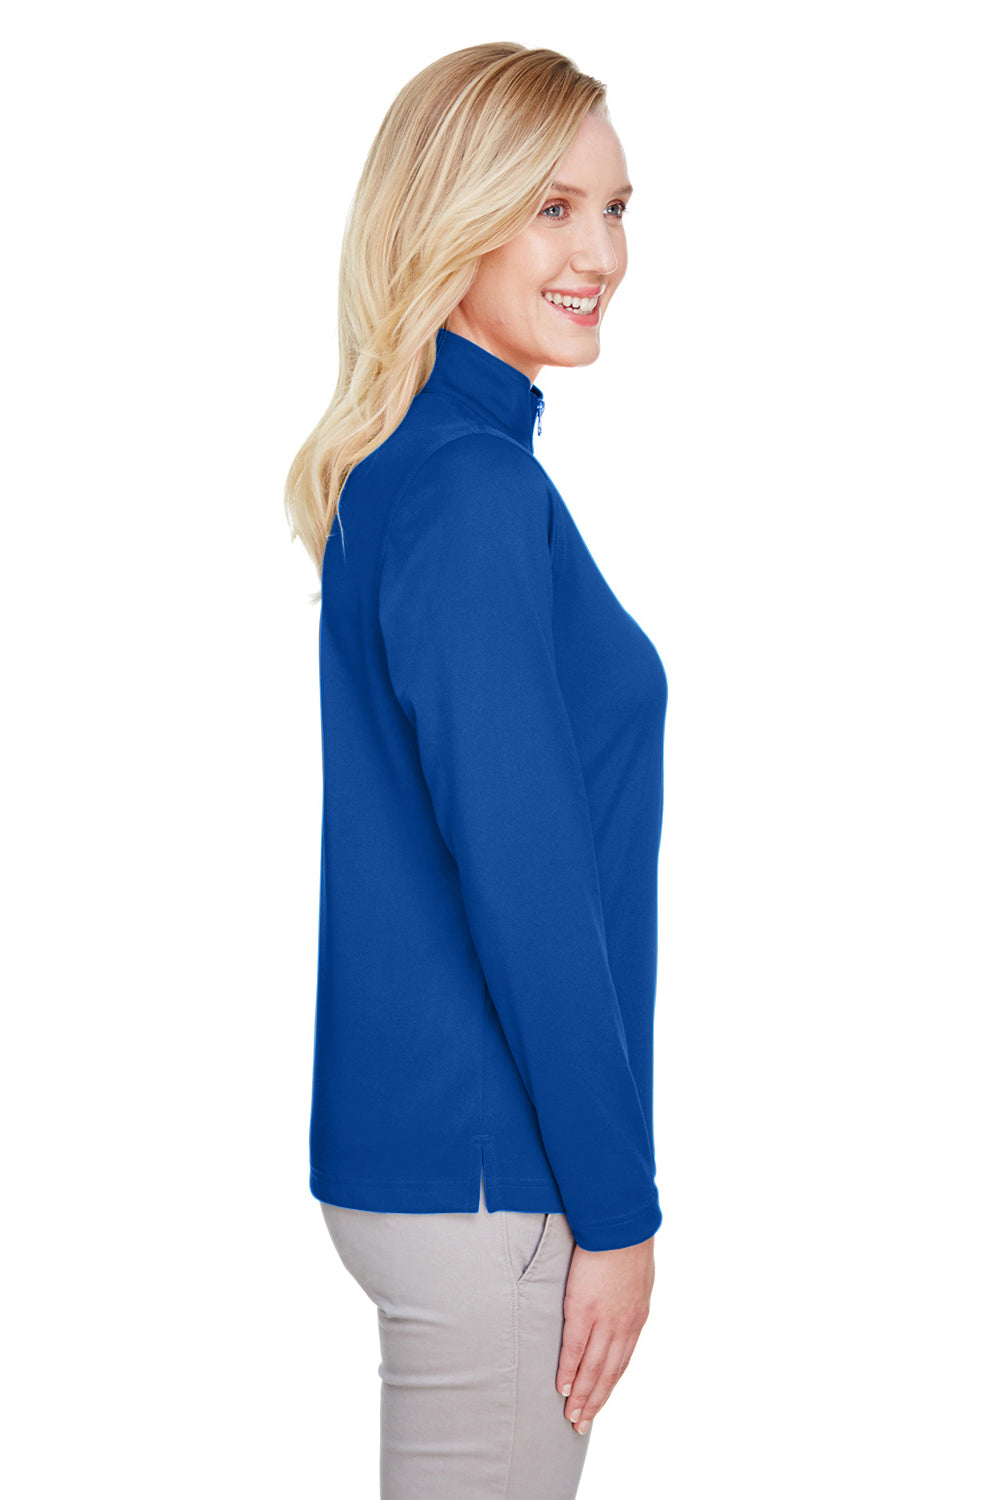 Harriton M748W Womens Advantage Performance Moisture Wicking 1/4 Zip Sweatshirt Royal Blue Side